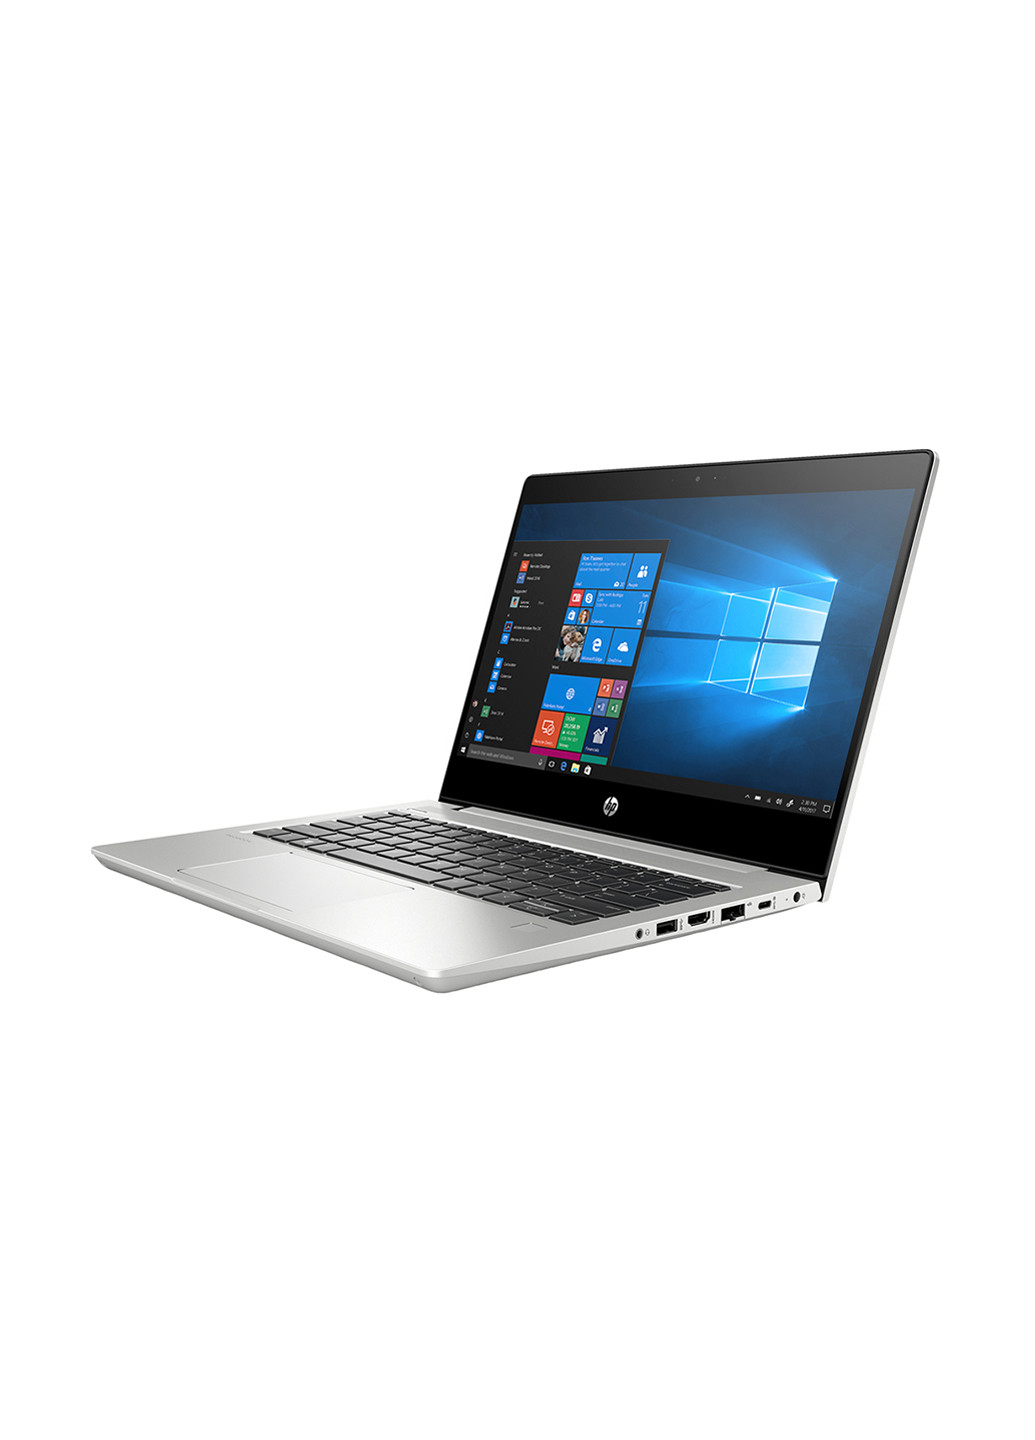 Ноутбук HP probook 430 g6 (5pp47ea) silver (136402426)